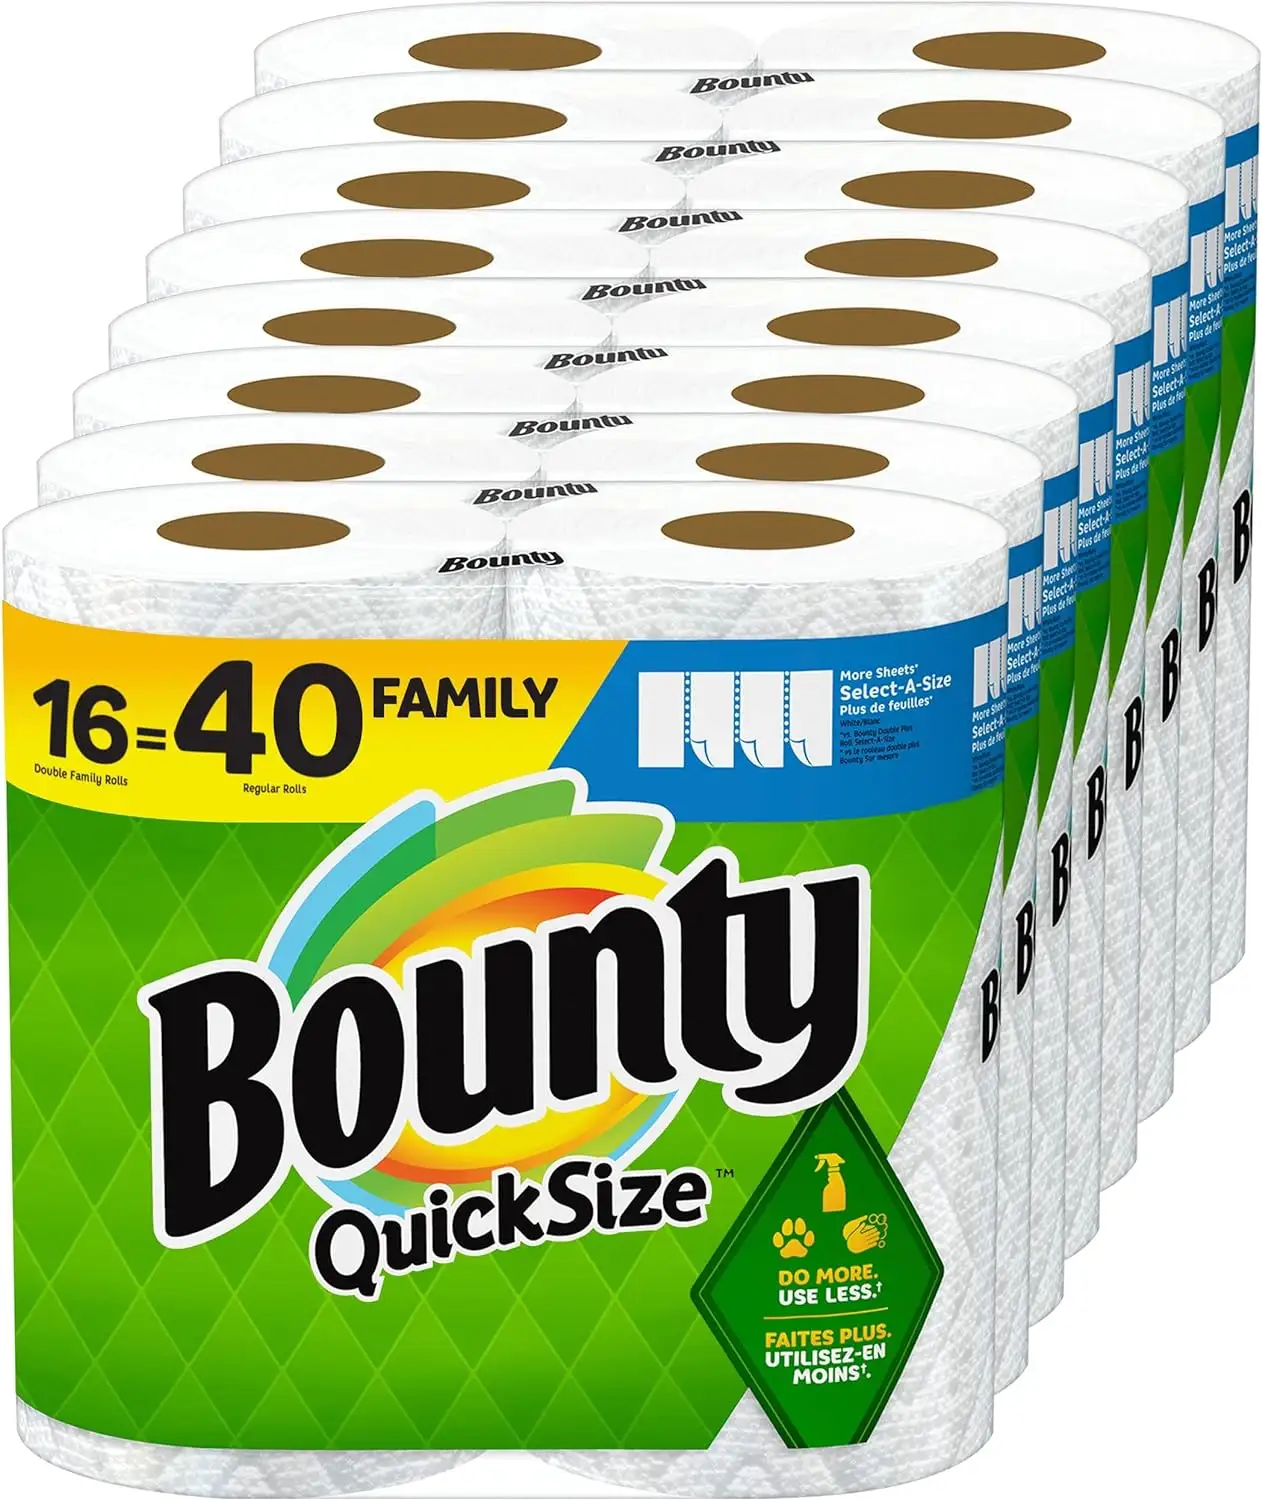 Toalhas de papel de tamanho rápido Bounty, branco, 16 rolos familiares = 40 rolos regulares